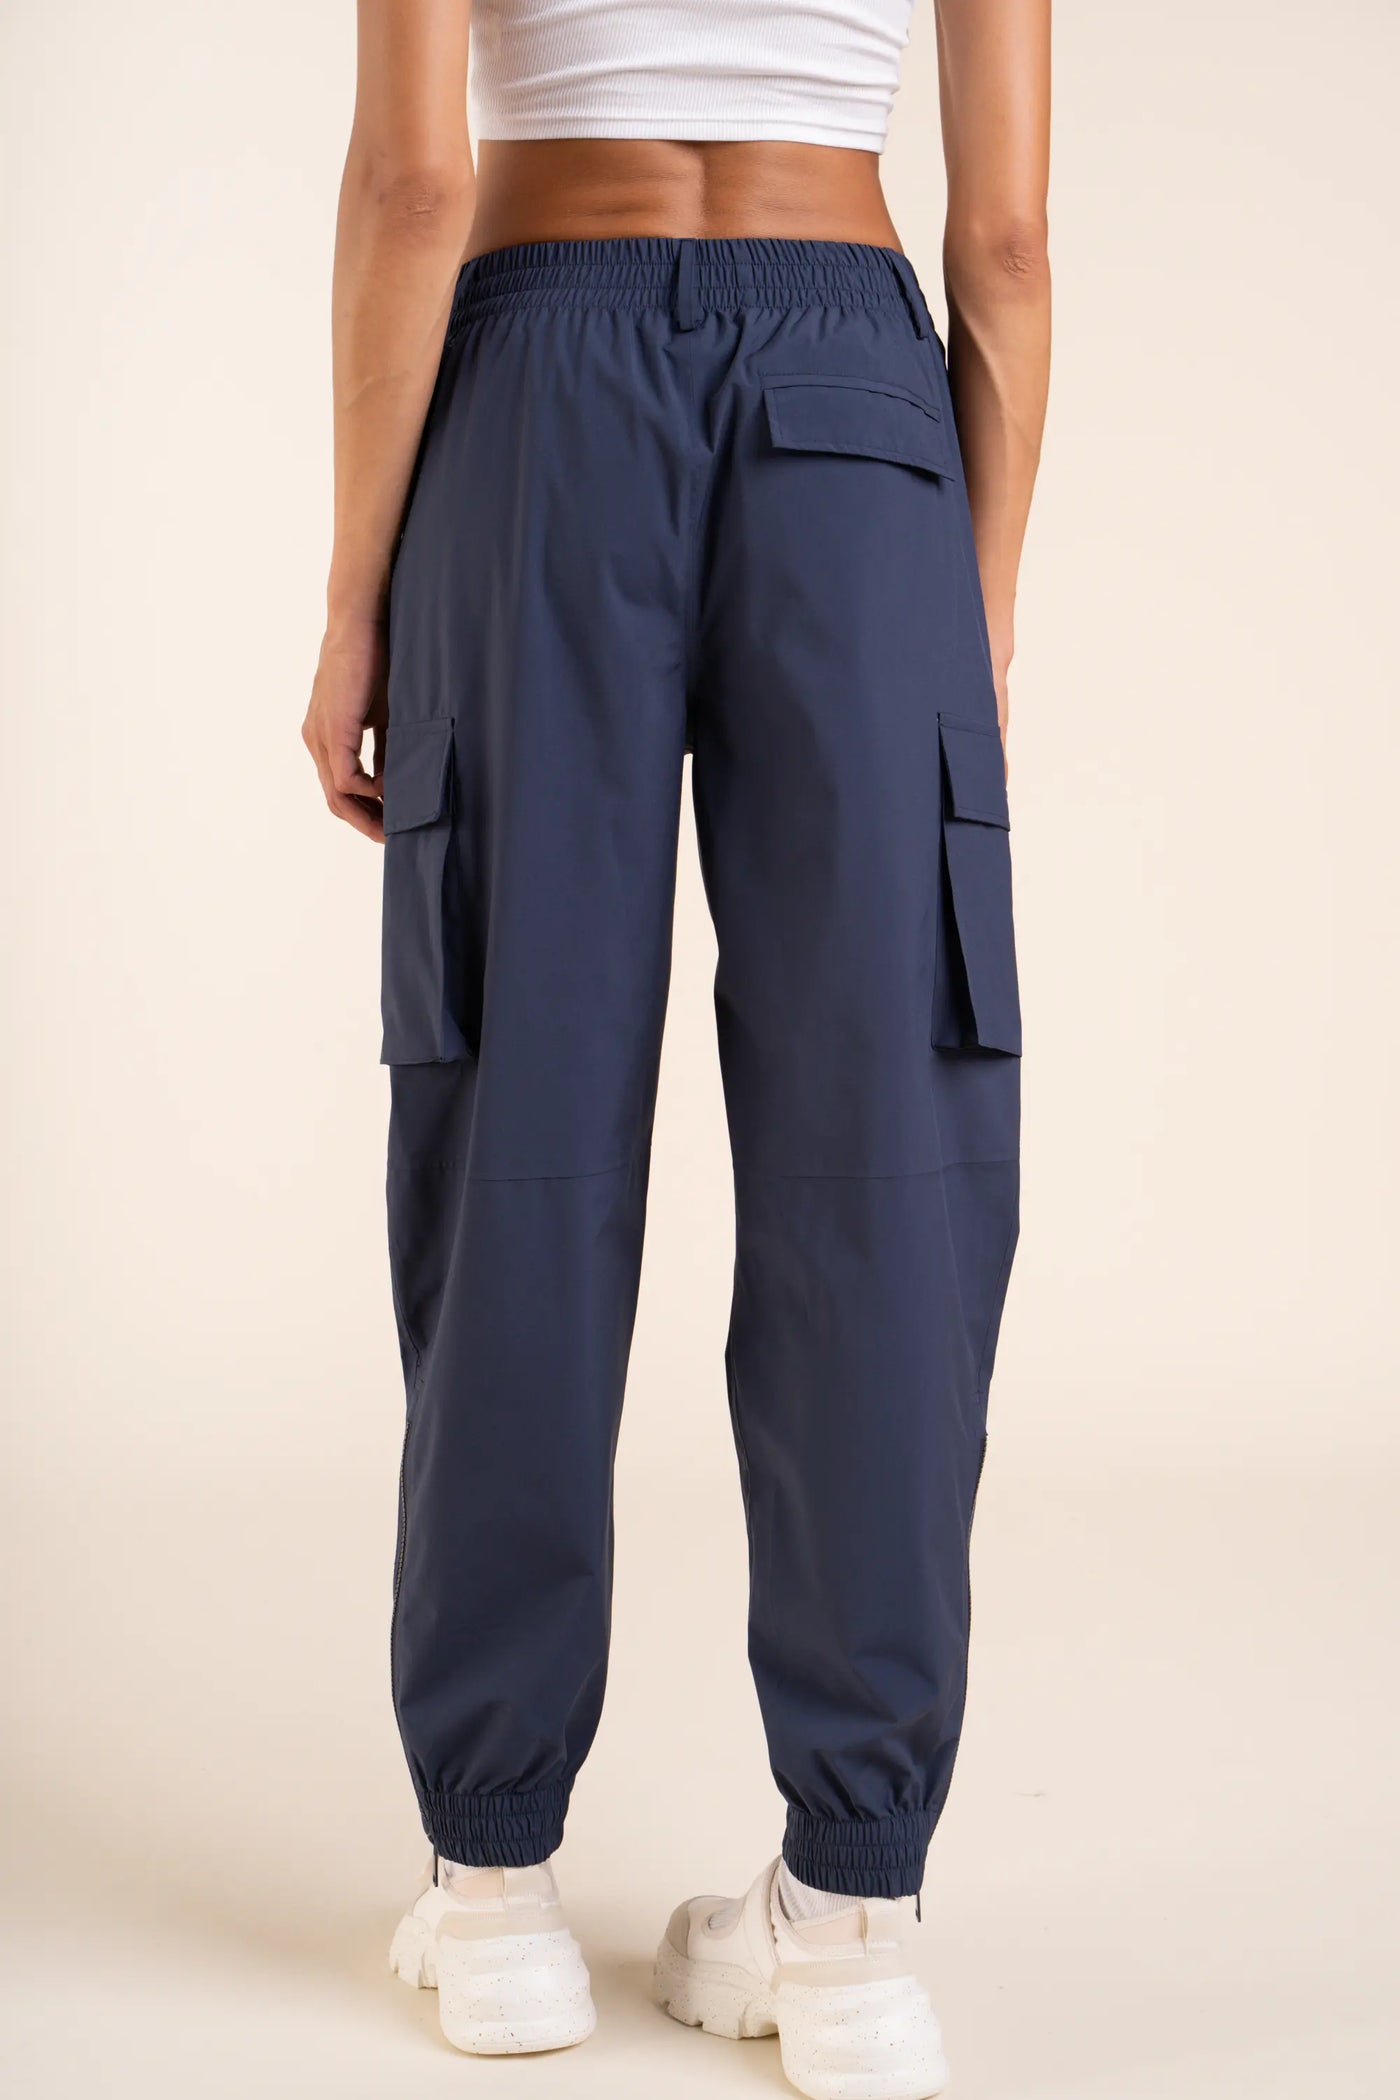 Gambetta multi-pocket waterproof cargo pants #couleur_indigo